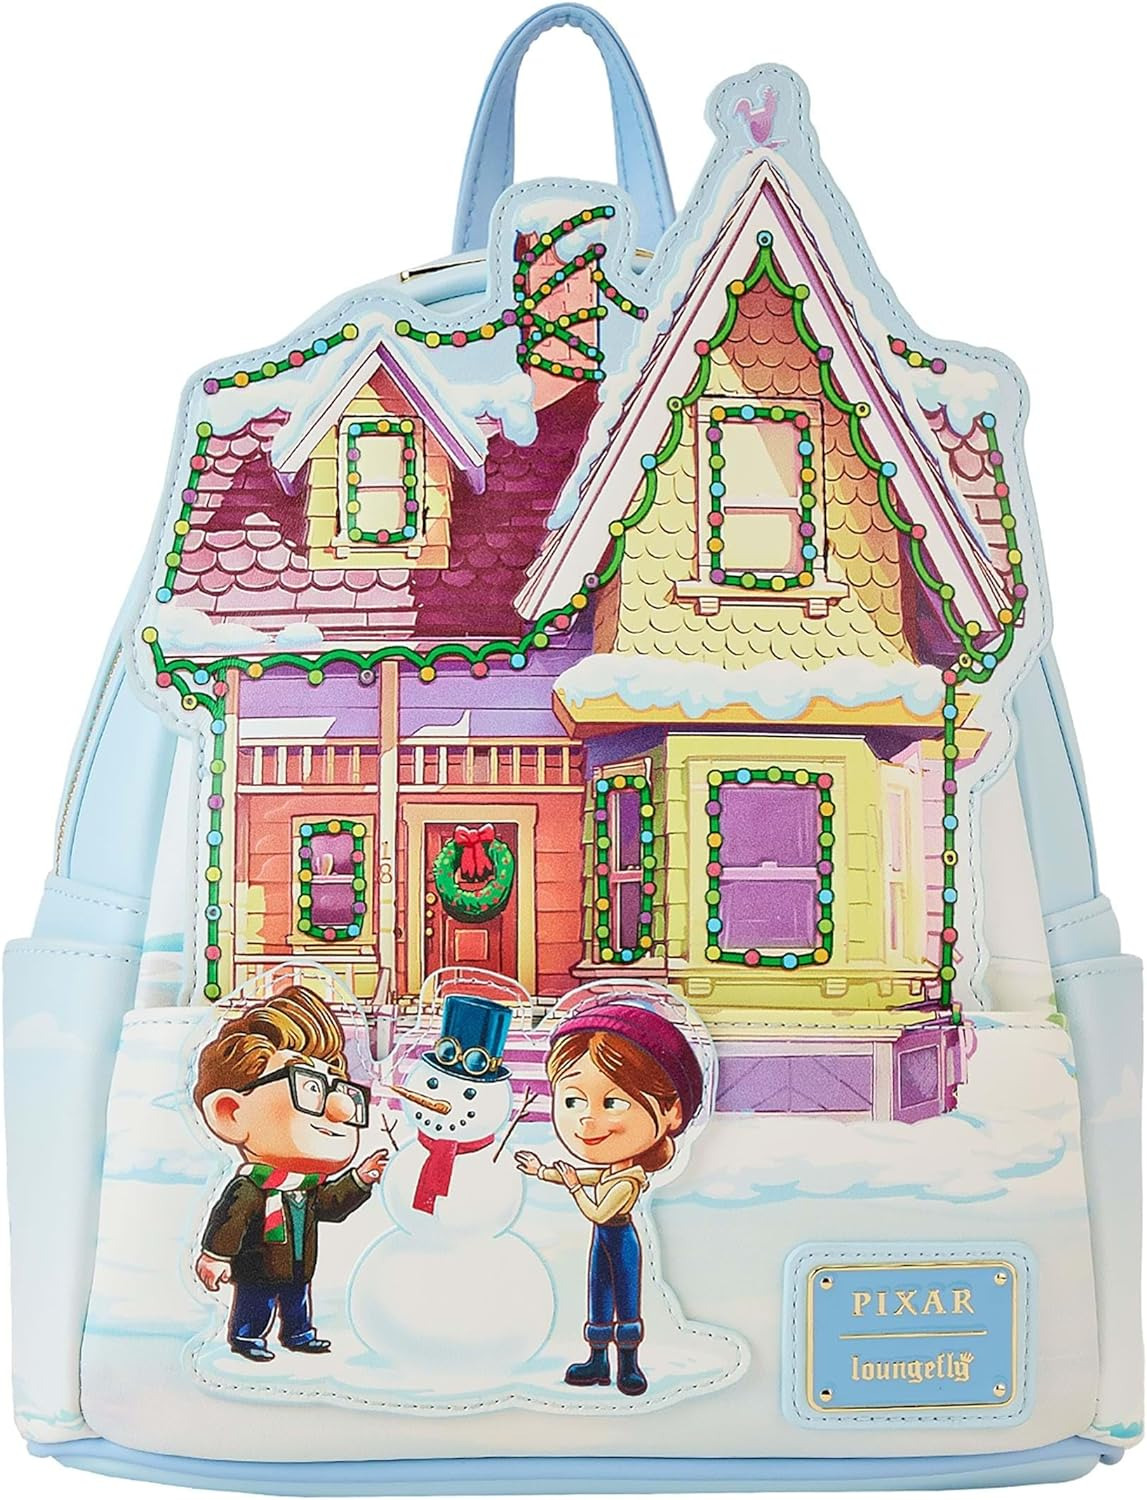 Disney Pixar up House Holiday Light up Mini Backpack